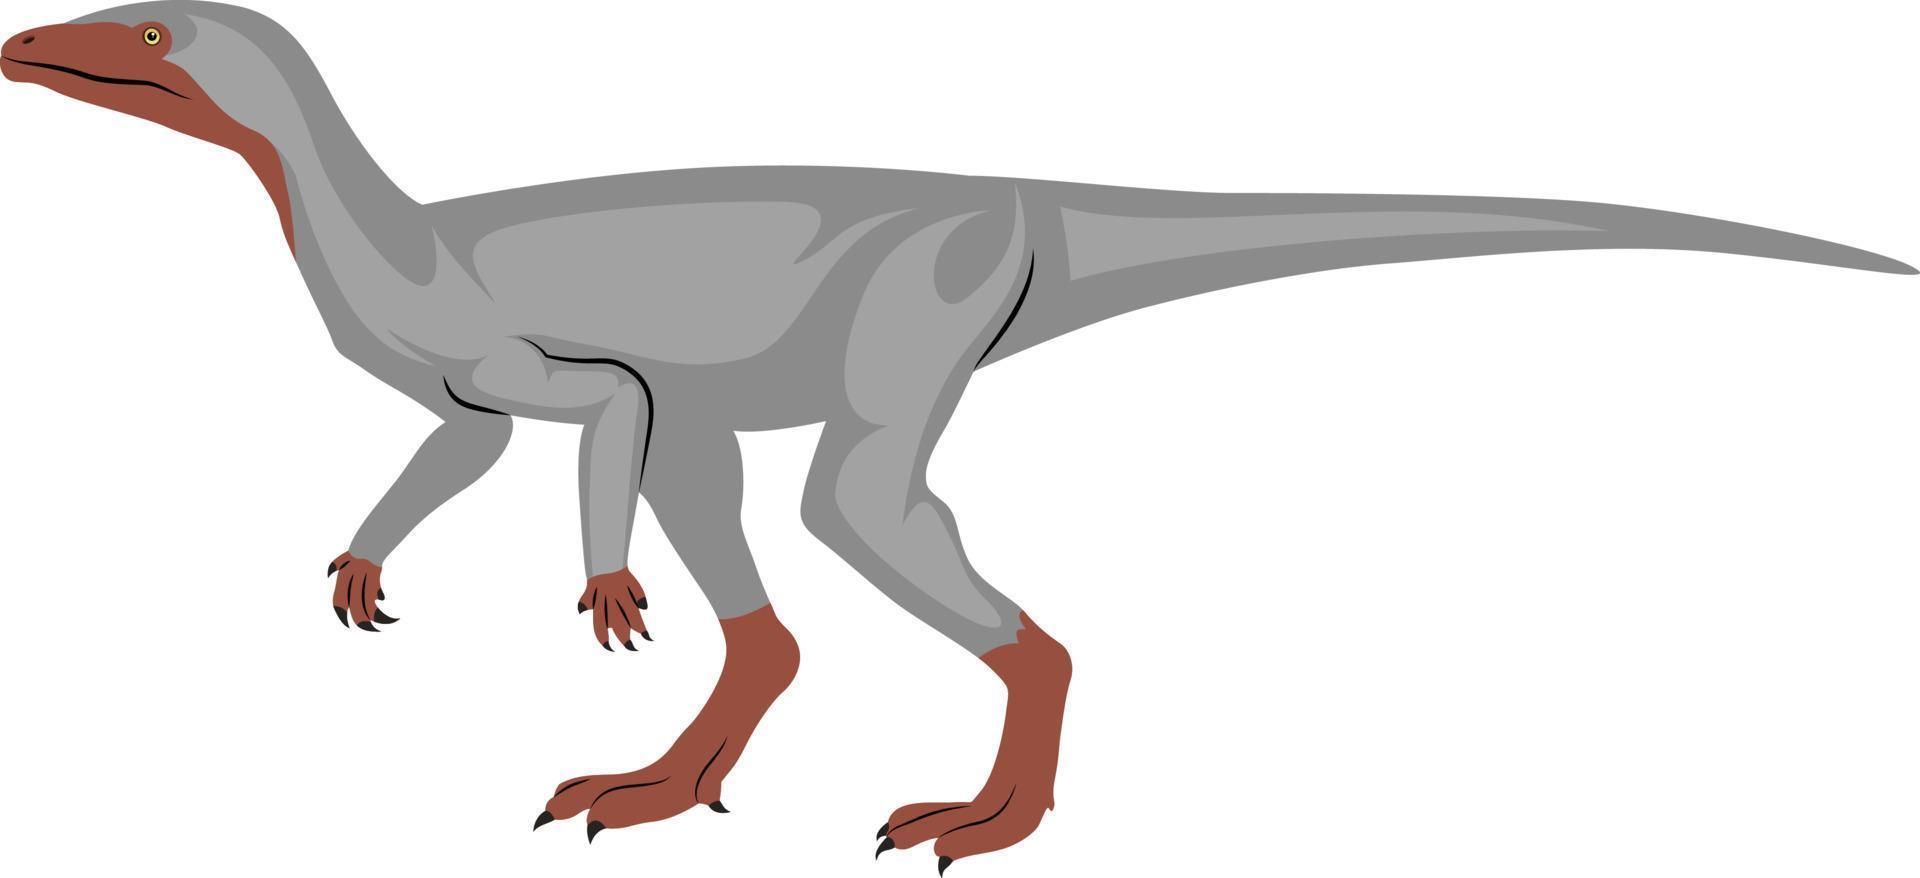 Eoraptor, illustration, vecteur sur fond blanc.